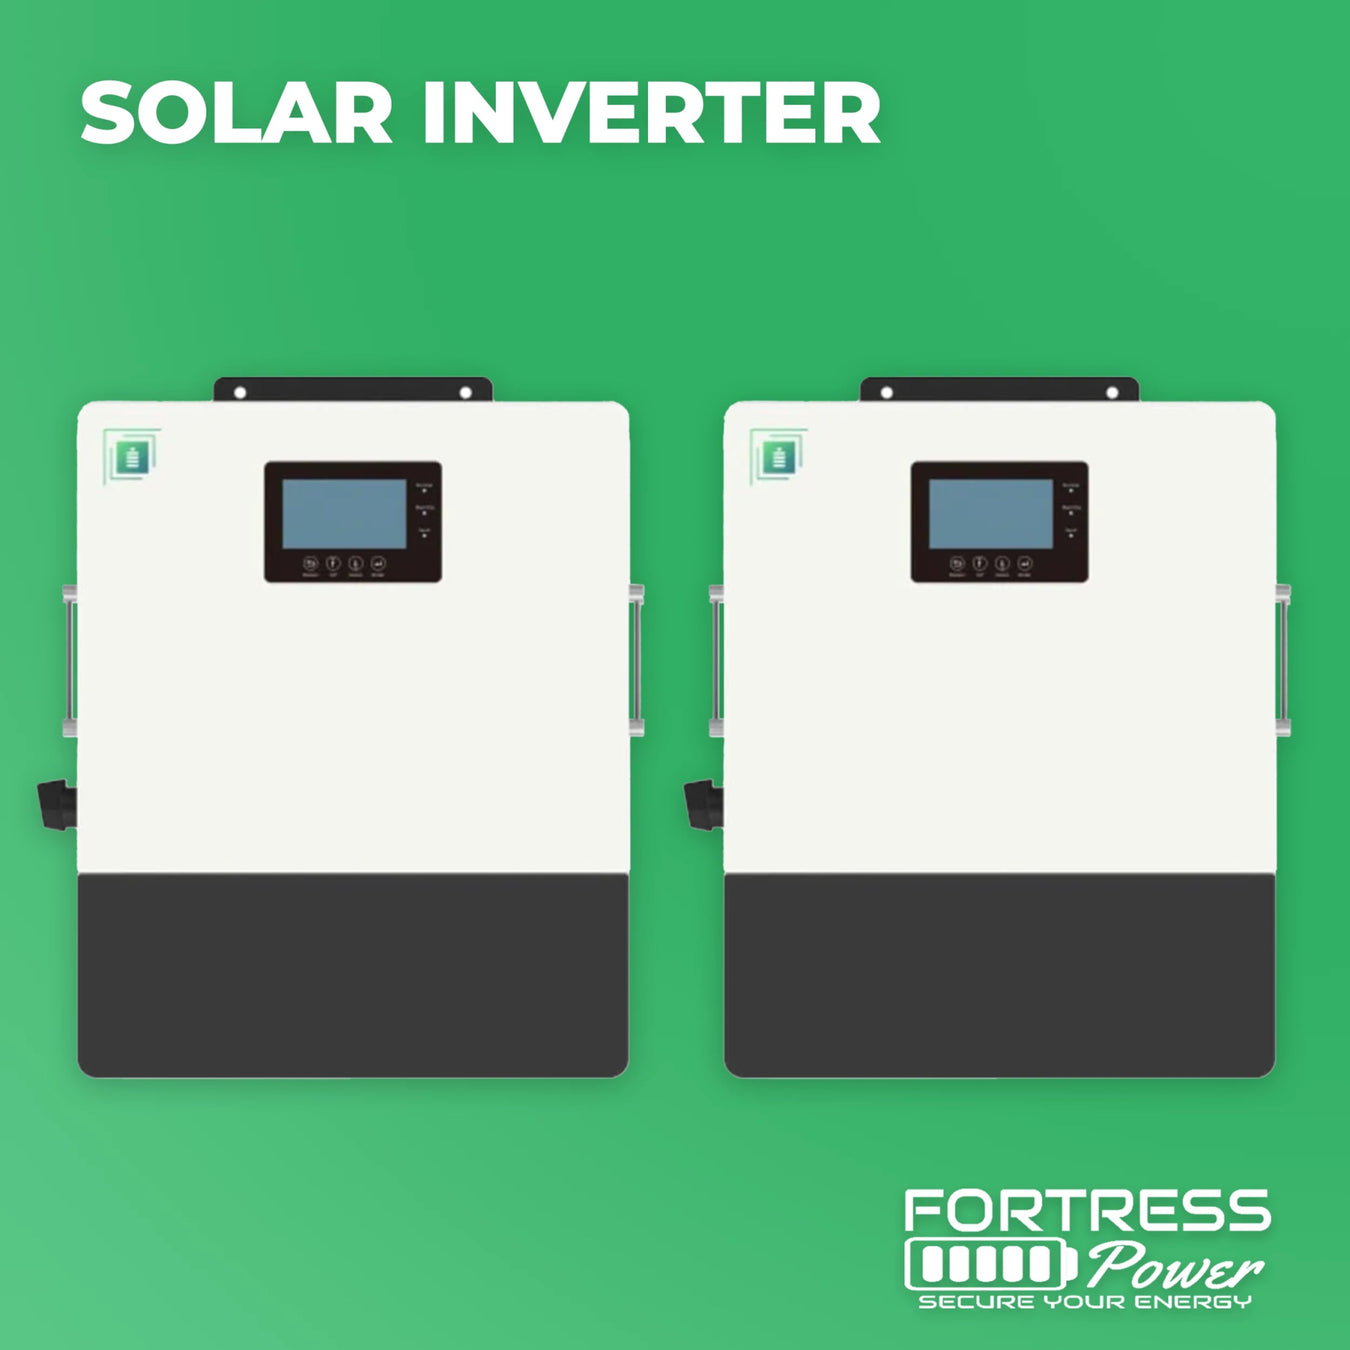 Fortress Power - Solar Inverter - PremiumDepot